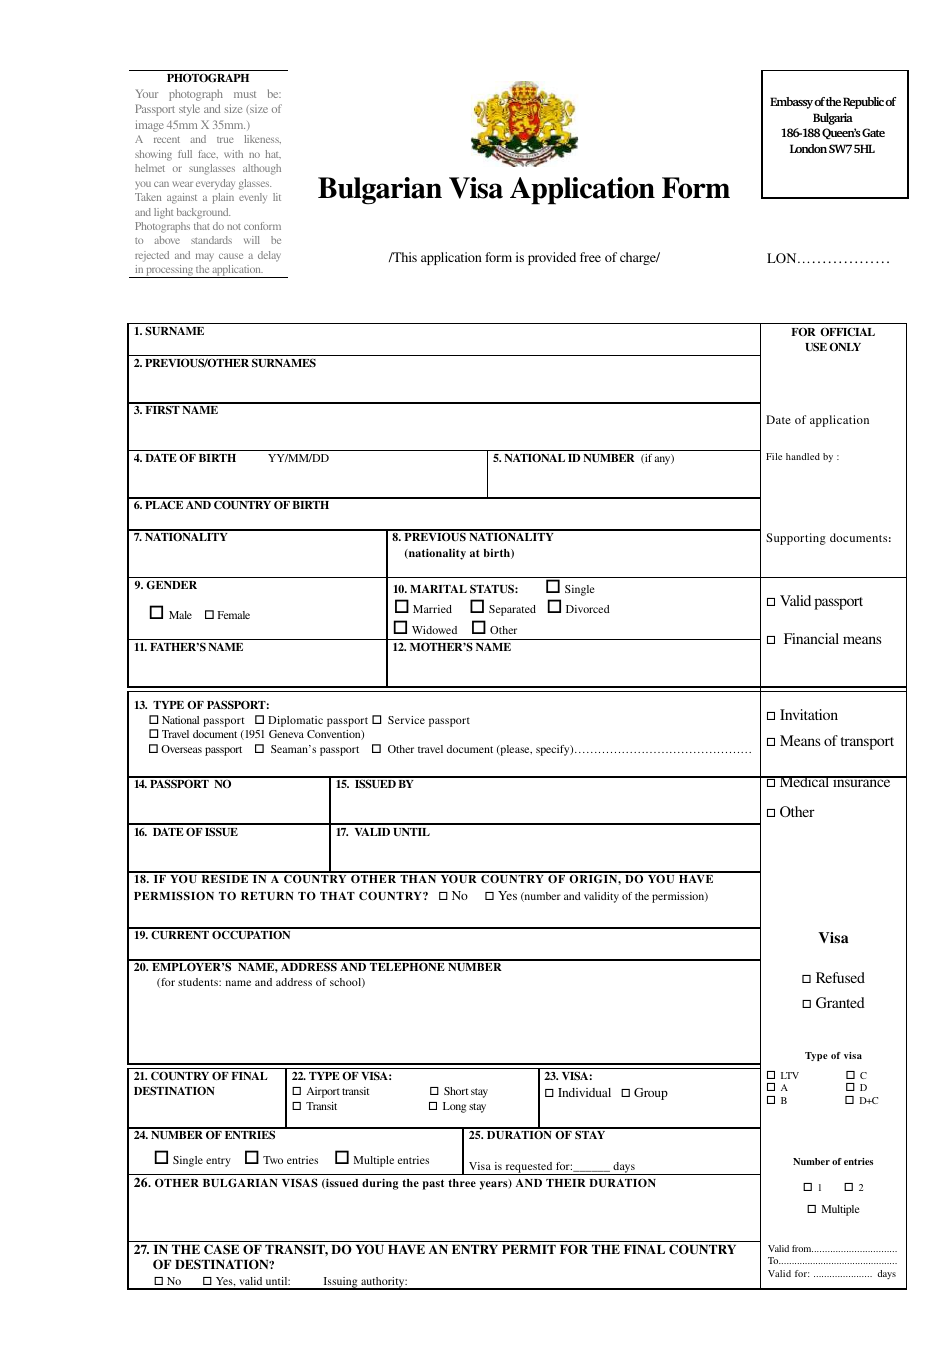 Bulgarian Visa Application Form - Embassy of the Republic of Bulgaria - London, United Kingdom, Page 1